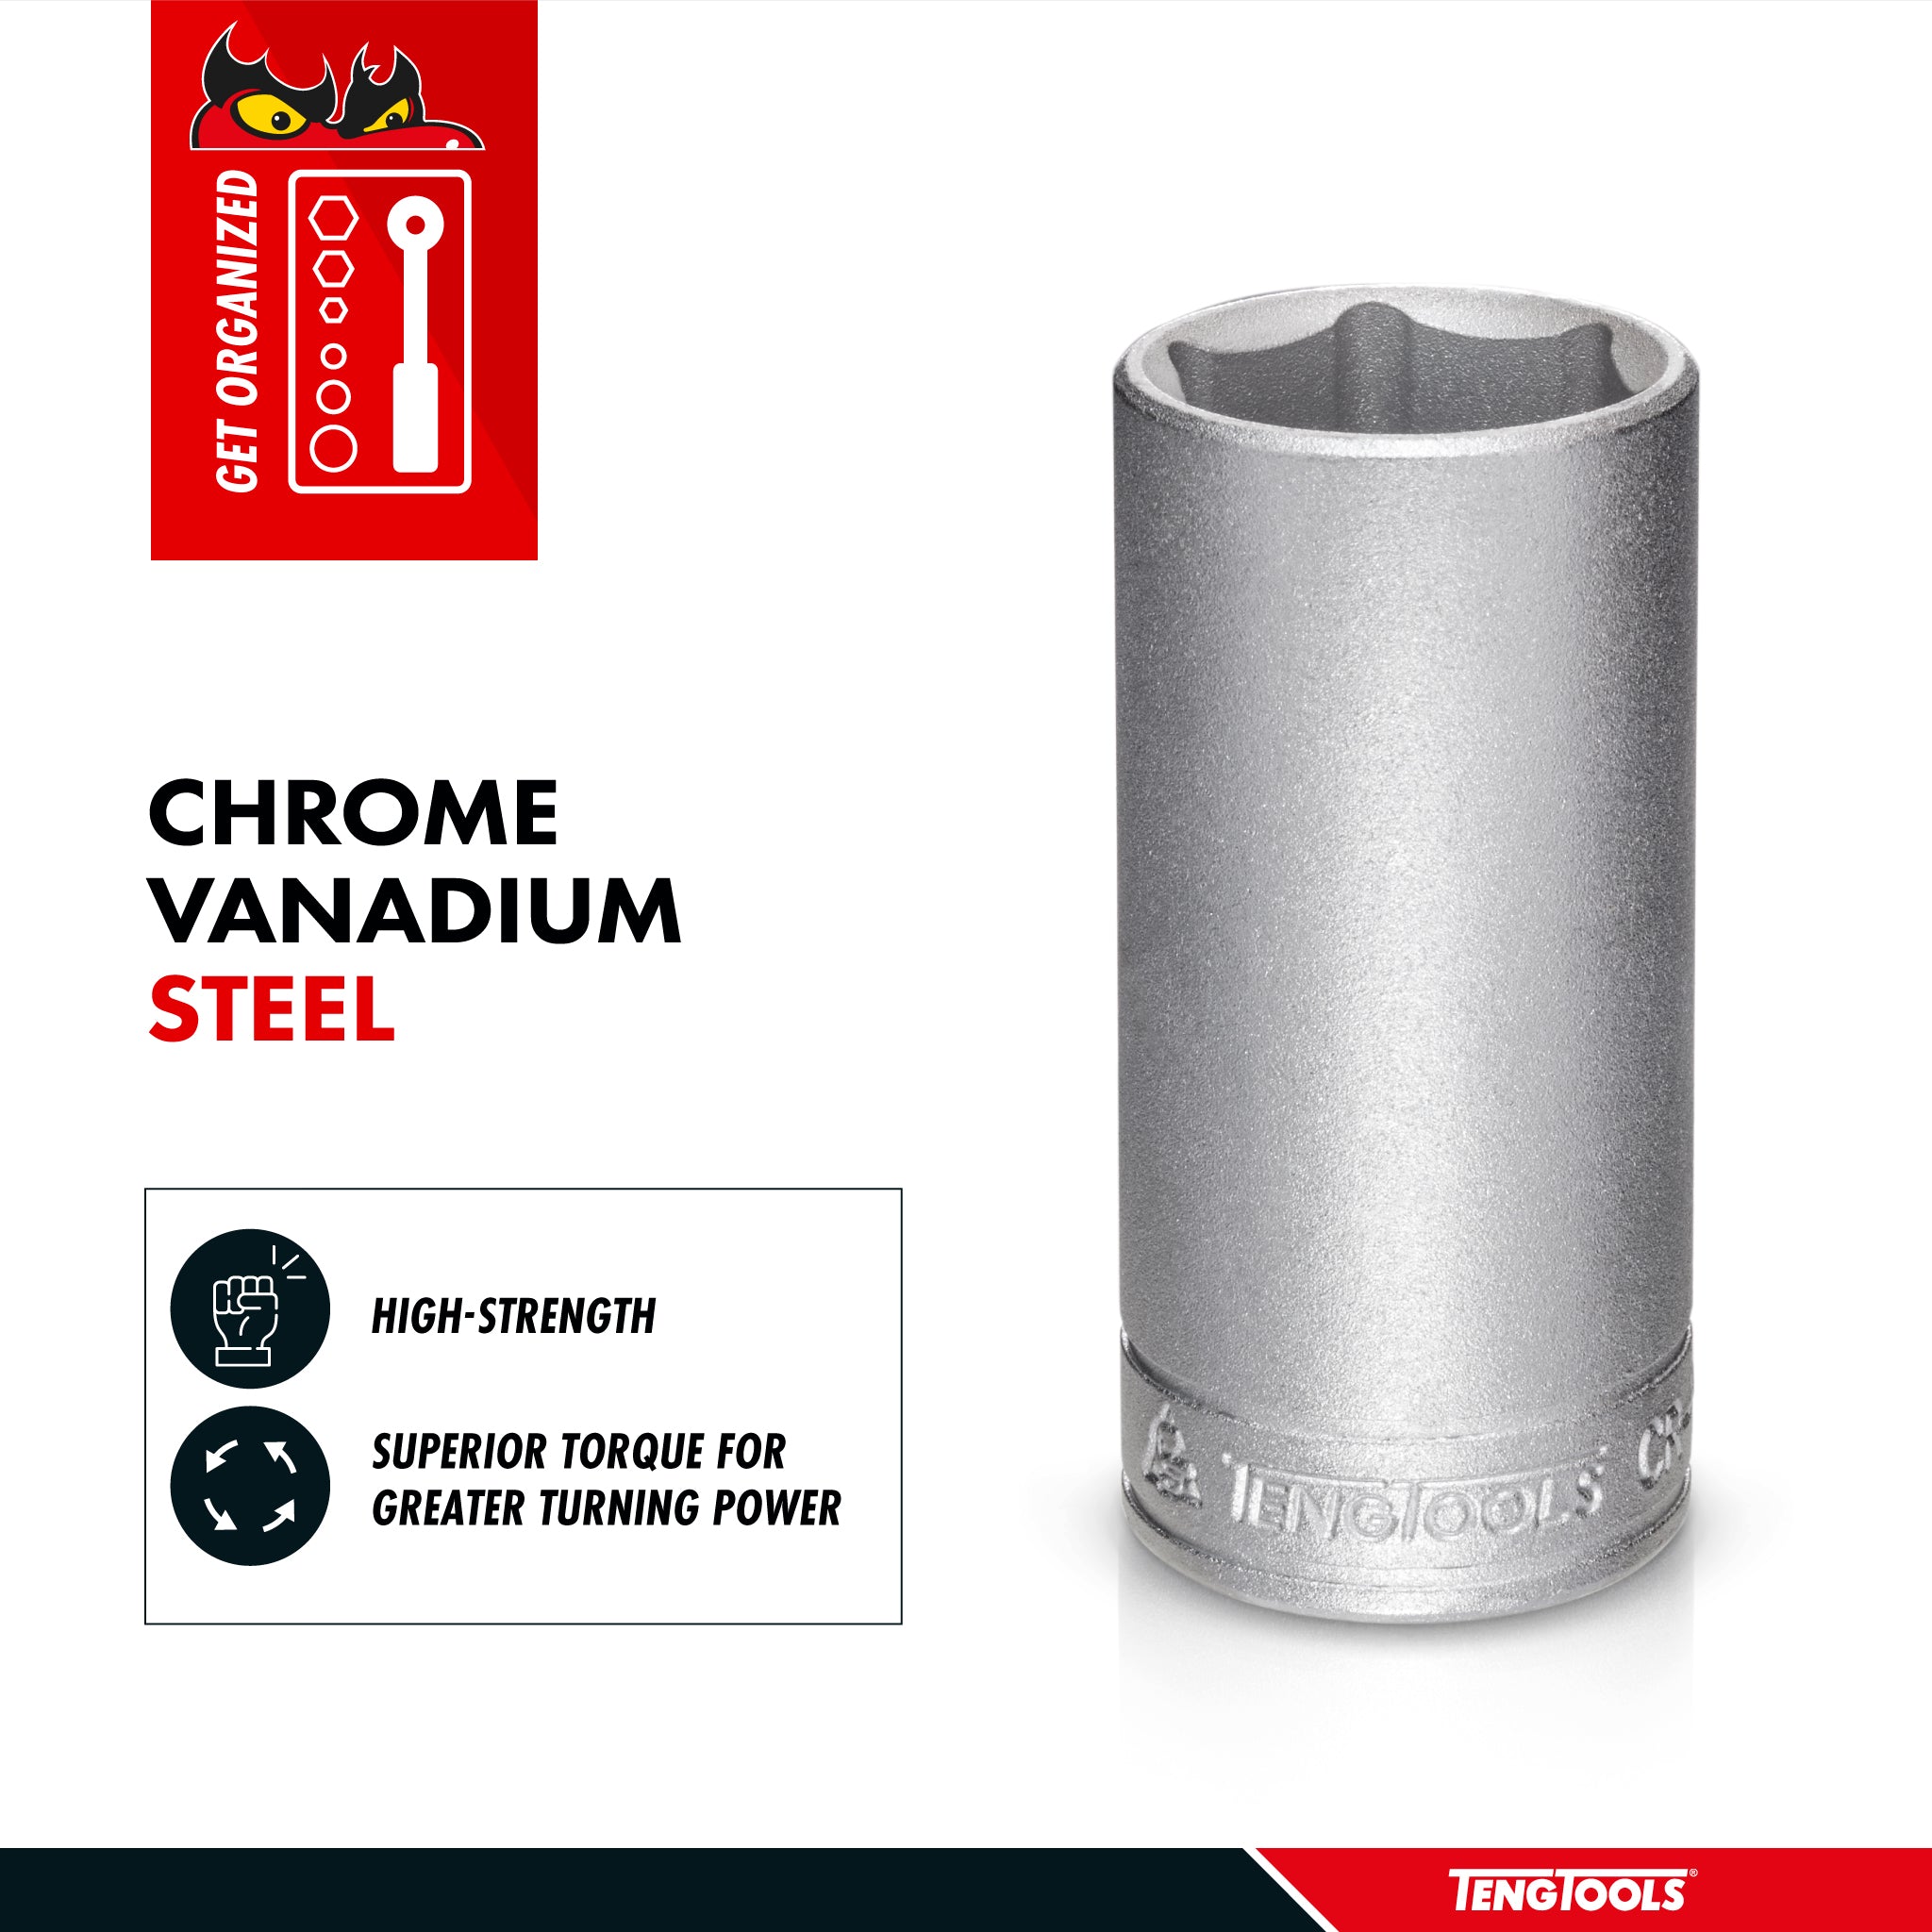 Teng Tools 3/8 Inch Drive 6 Point Metric Deep Chrome Vanadium Sockets - 13mm